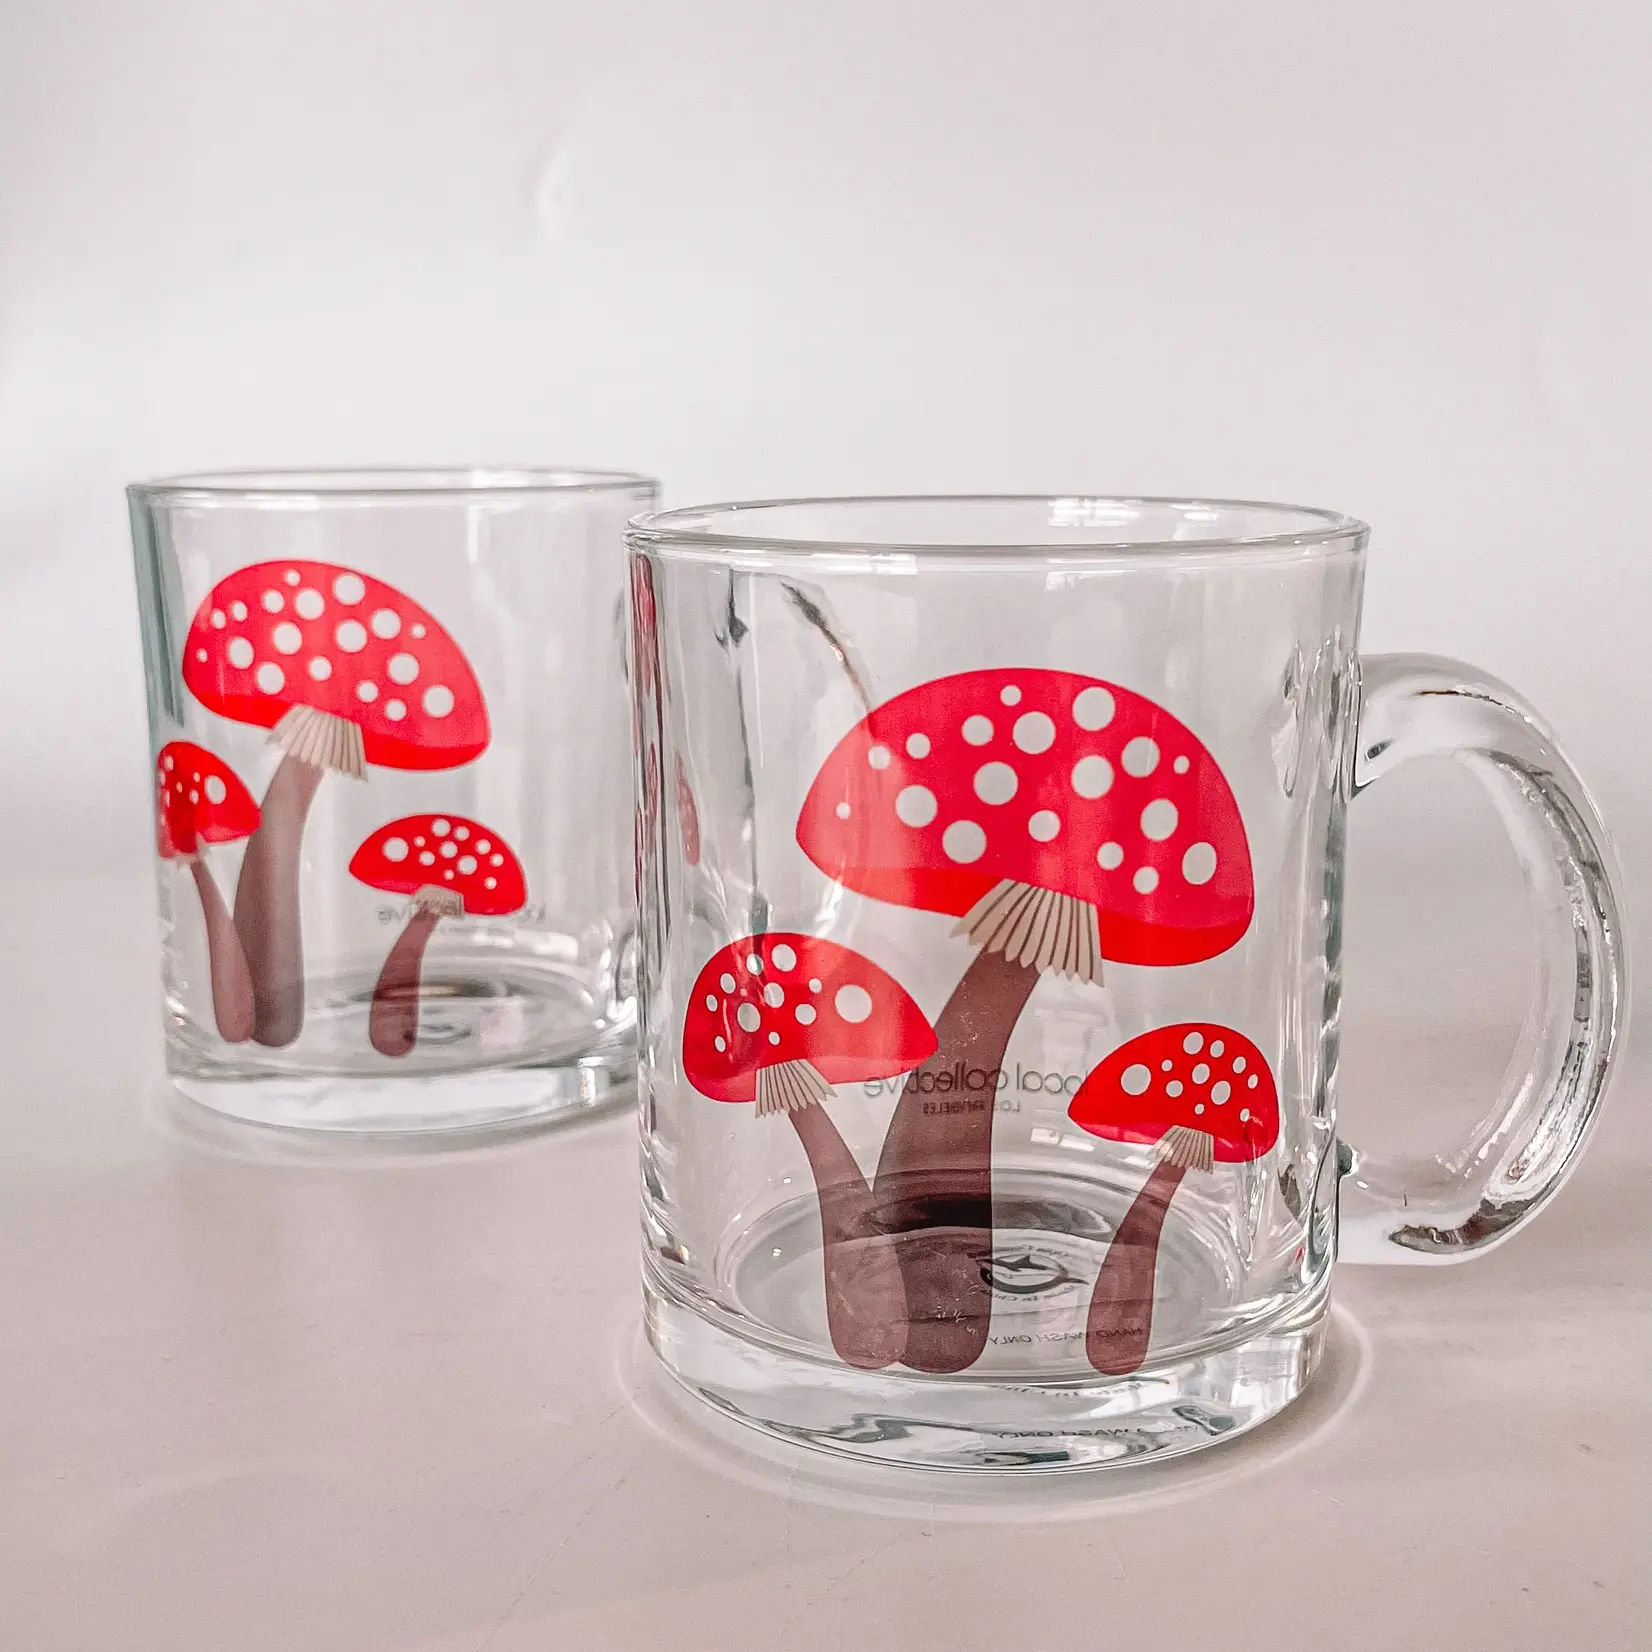 local collective Mushroom Inspired Glass Mug